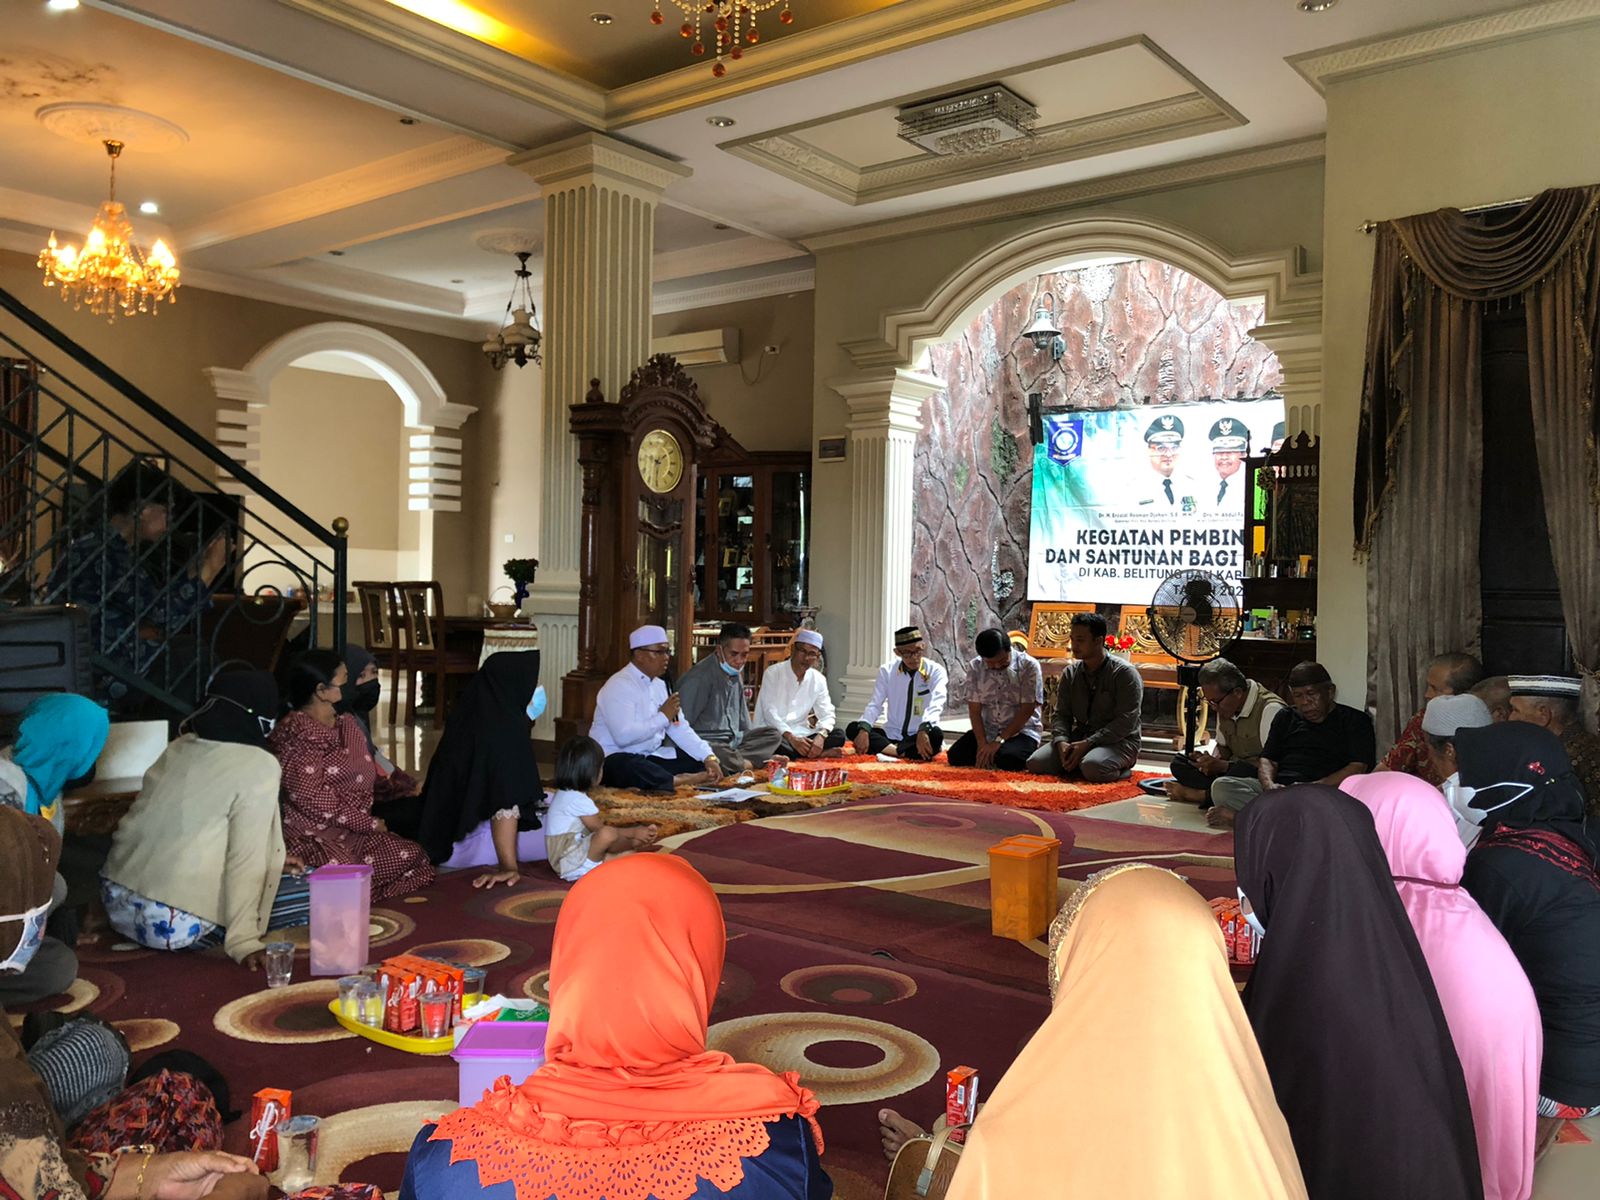 BAZNAS Prov. Kep. Bangka Belitung Bekerjasama dengan Pemerintah Prov. Kep. Bangka Belitung lakukan Kegiatan Pembinaan Dhuafa di Kab. Belitung